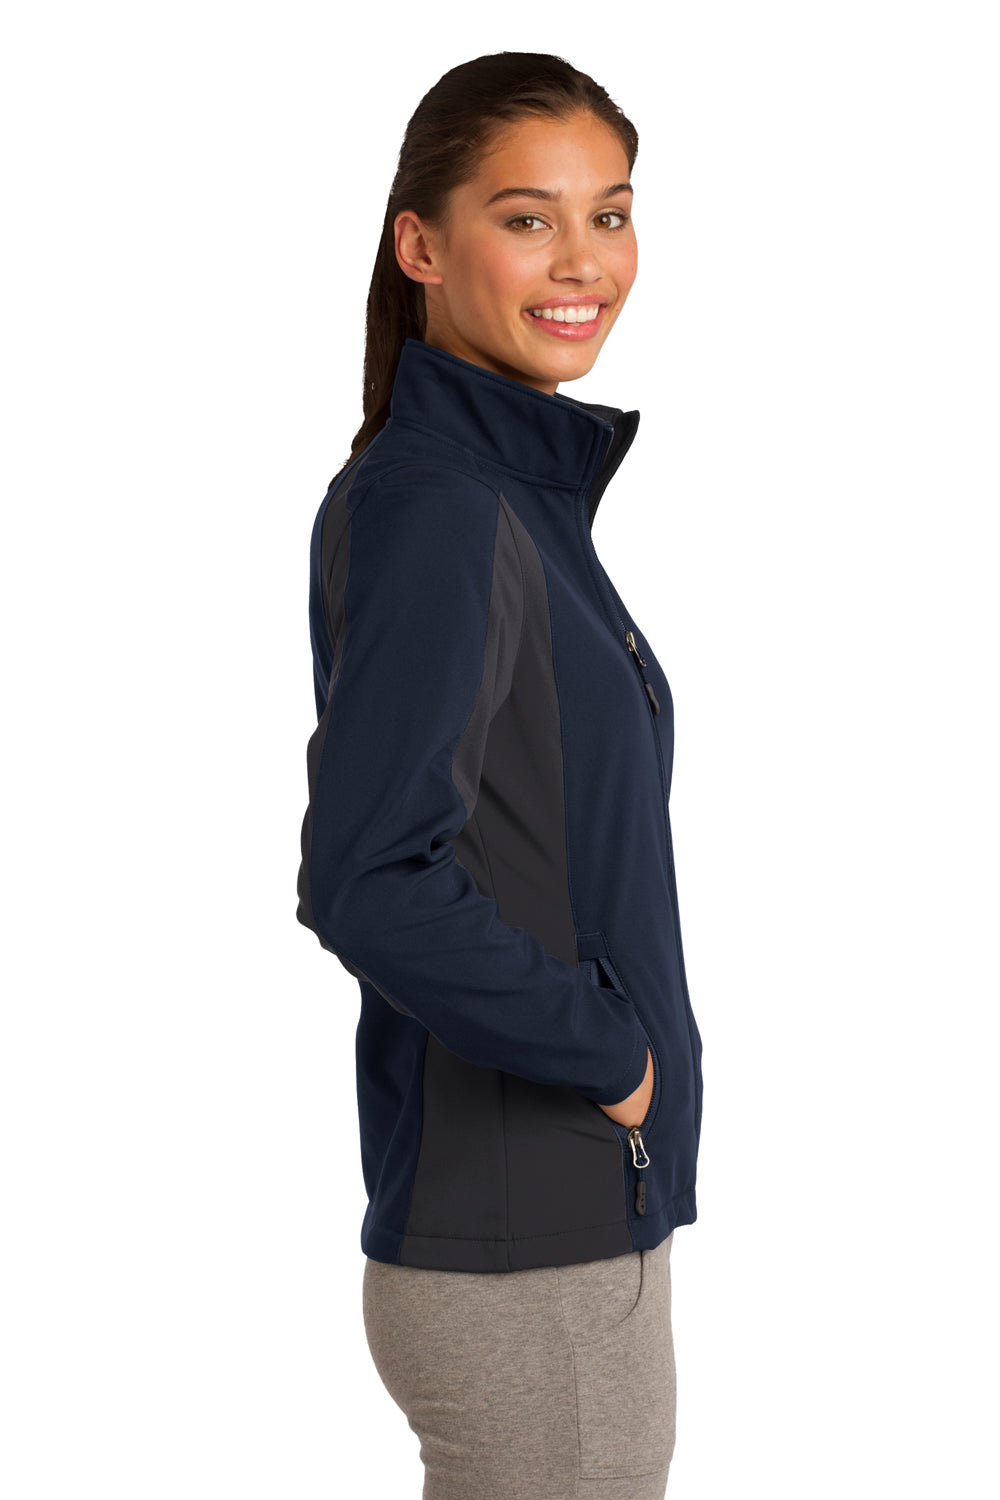 Sport-Tek LST970 Womens Water Resistant Full Zip Jacket Navy Blue/Grey Side